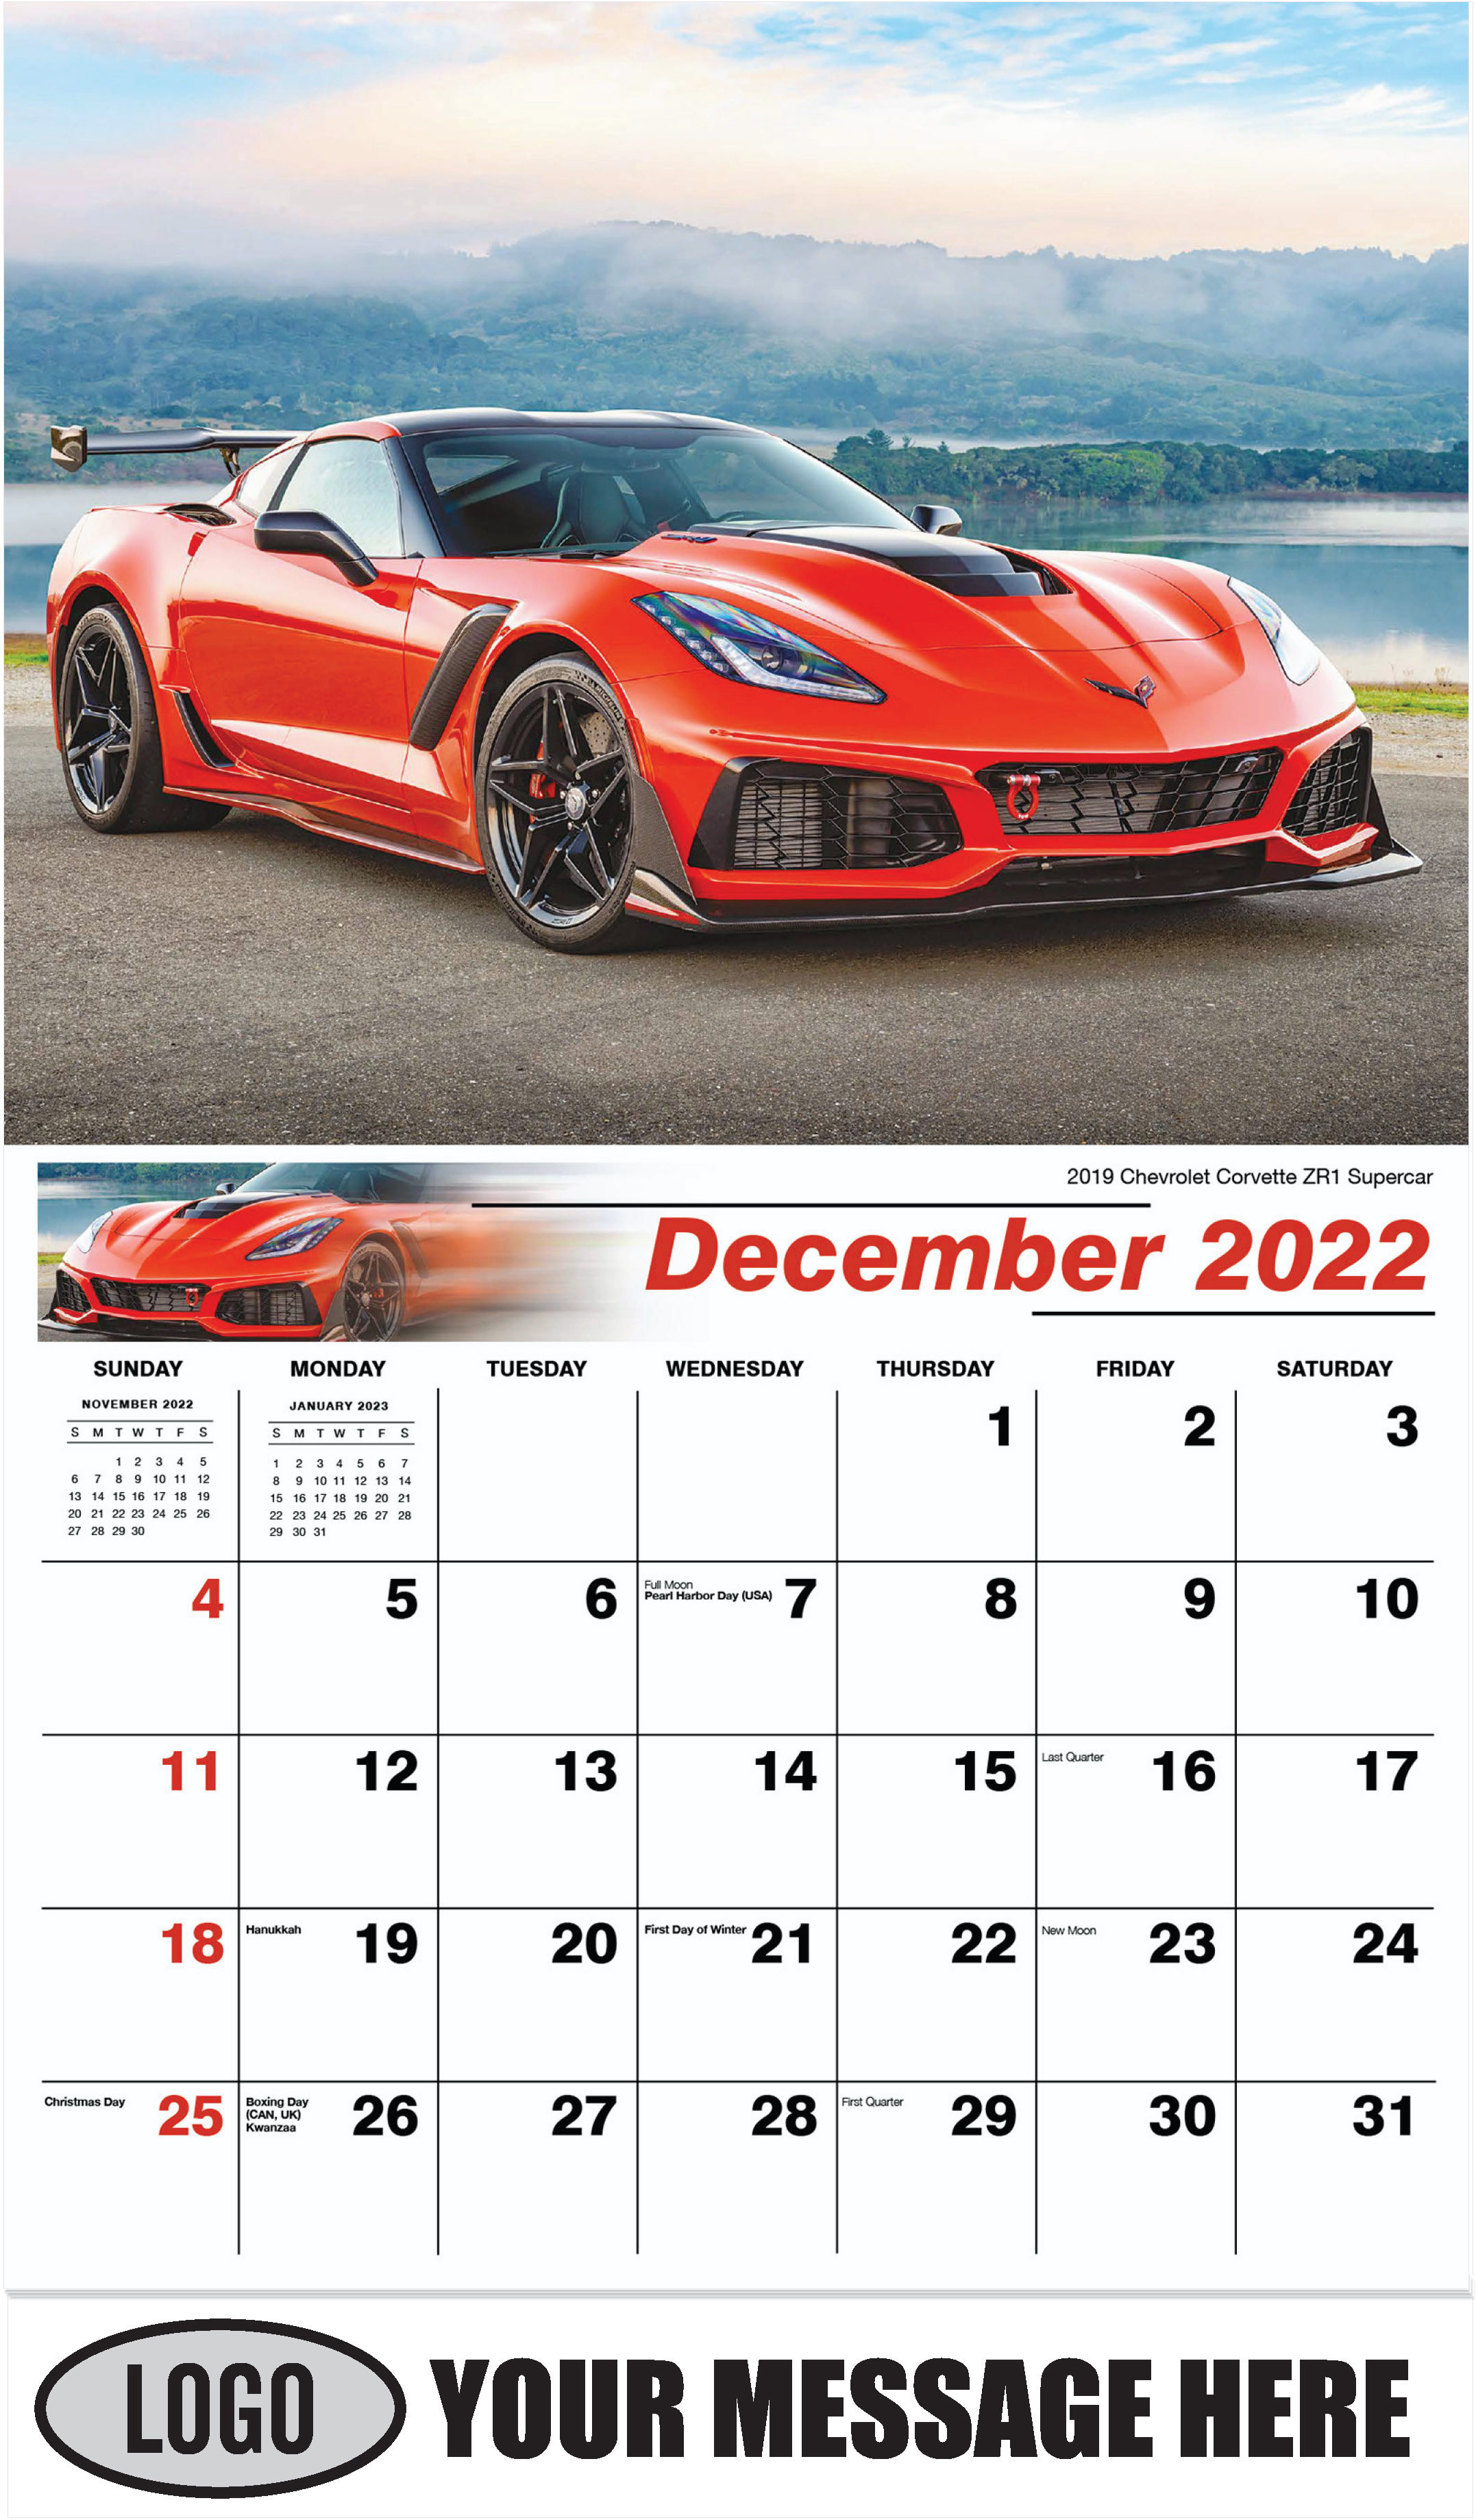 2019 Chevrolet Corvette ZR1 Supercar - December 2022 - Exotic Cars 2023 Promotional Calendar